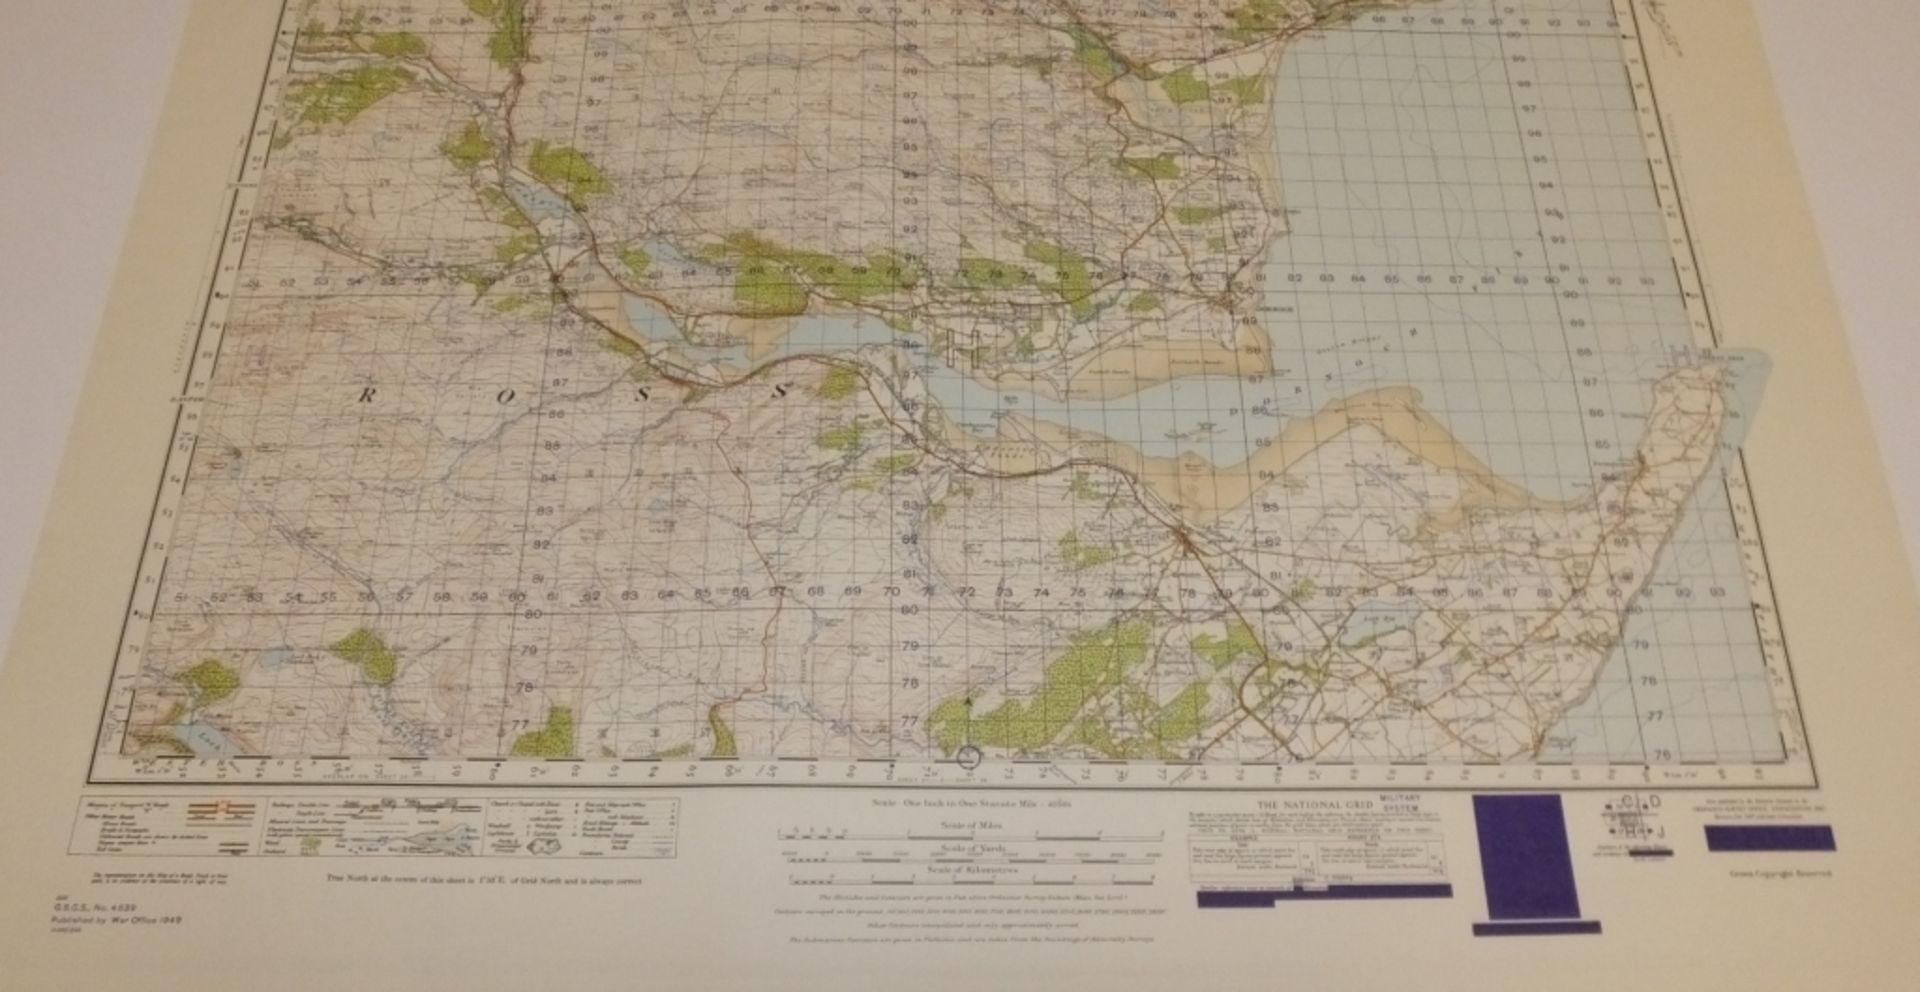 29x SCOTLAND MAP DORNOCH 1INCH 1MILE 1949 POPULAR EDITION 4639GSGS SHEET 21 - Image 3 of 3